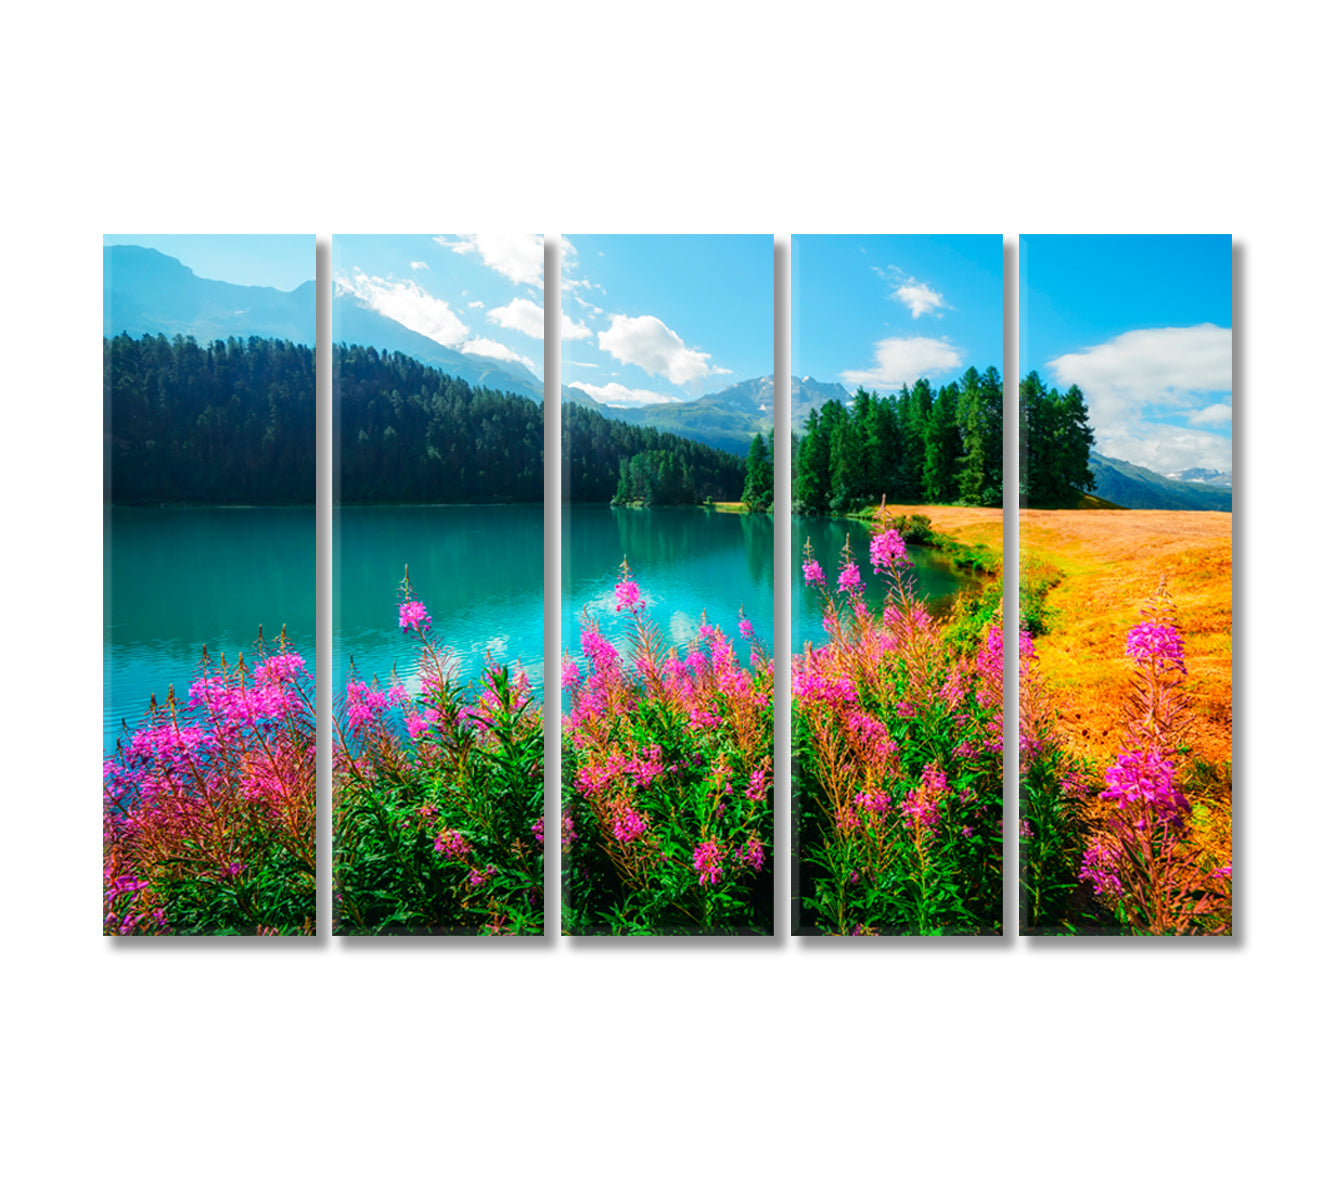 Summer Landscape On The Champferersee Lake Switzerland Canvas Print-Canvas Print-CetArt-5 Panels-36x24 inches-CetArt